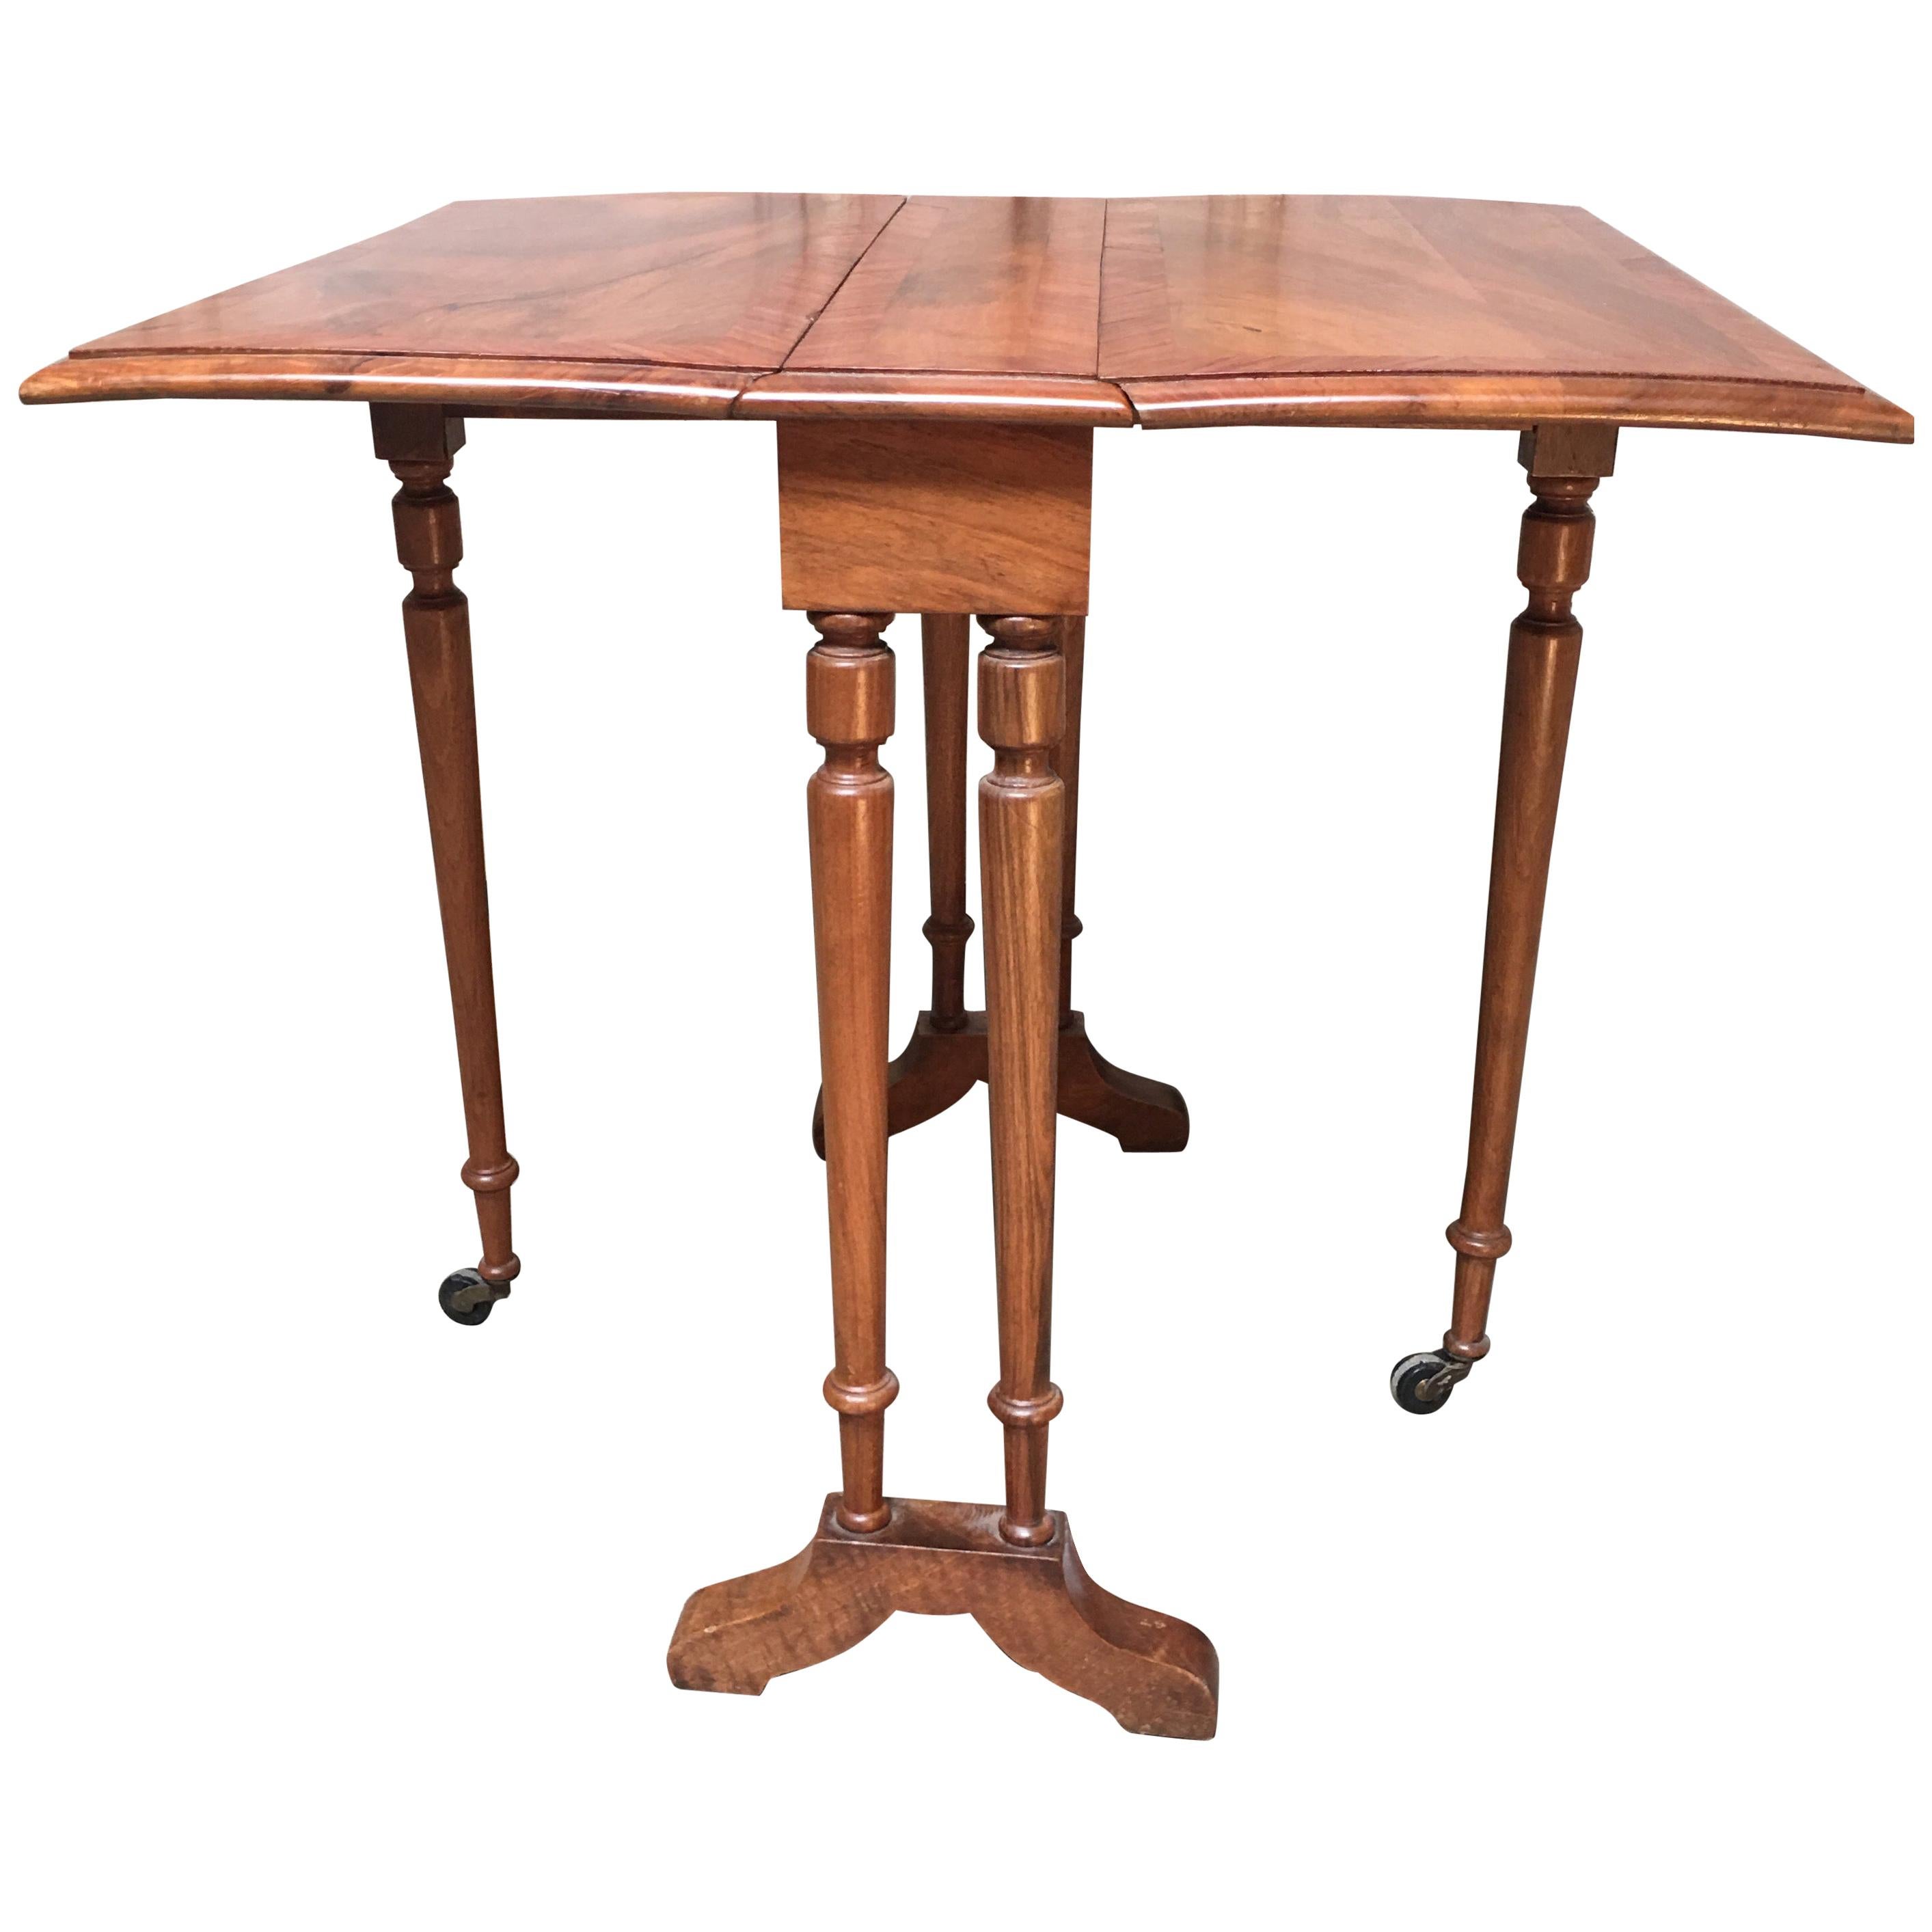 19th Century English Sutherland Drop-Leaf Table in Walnut and Kingwood Veneer